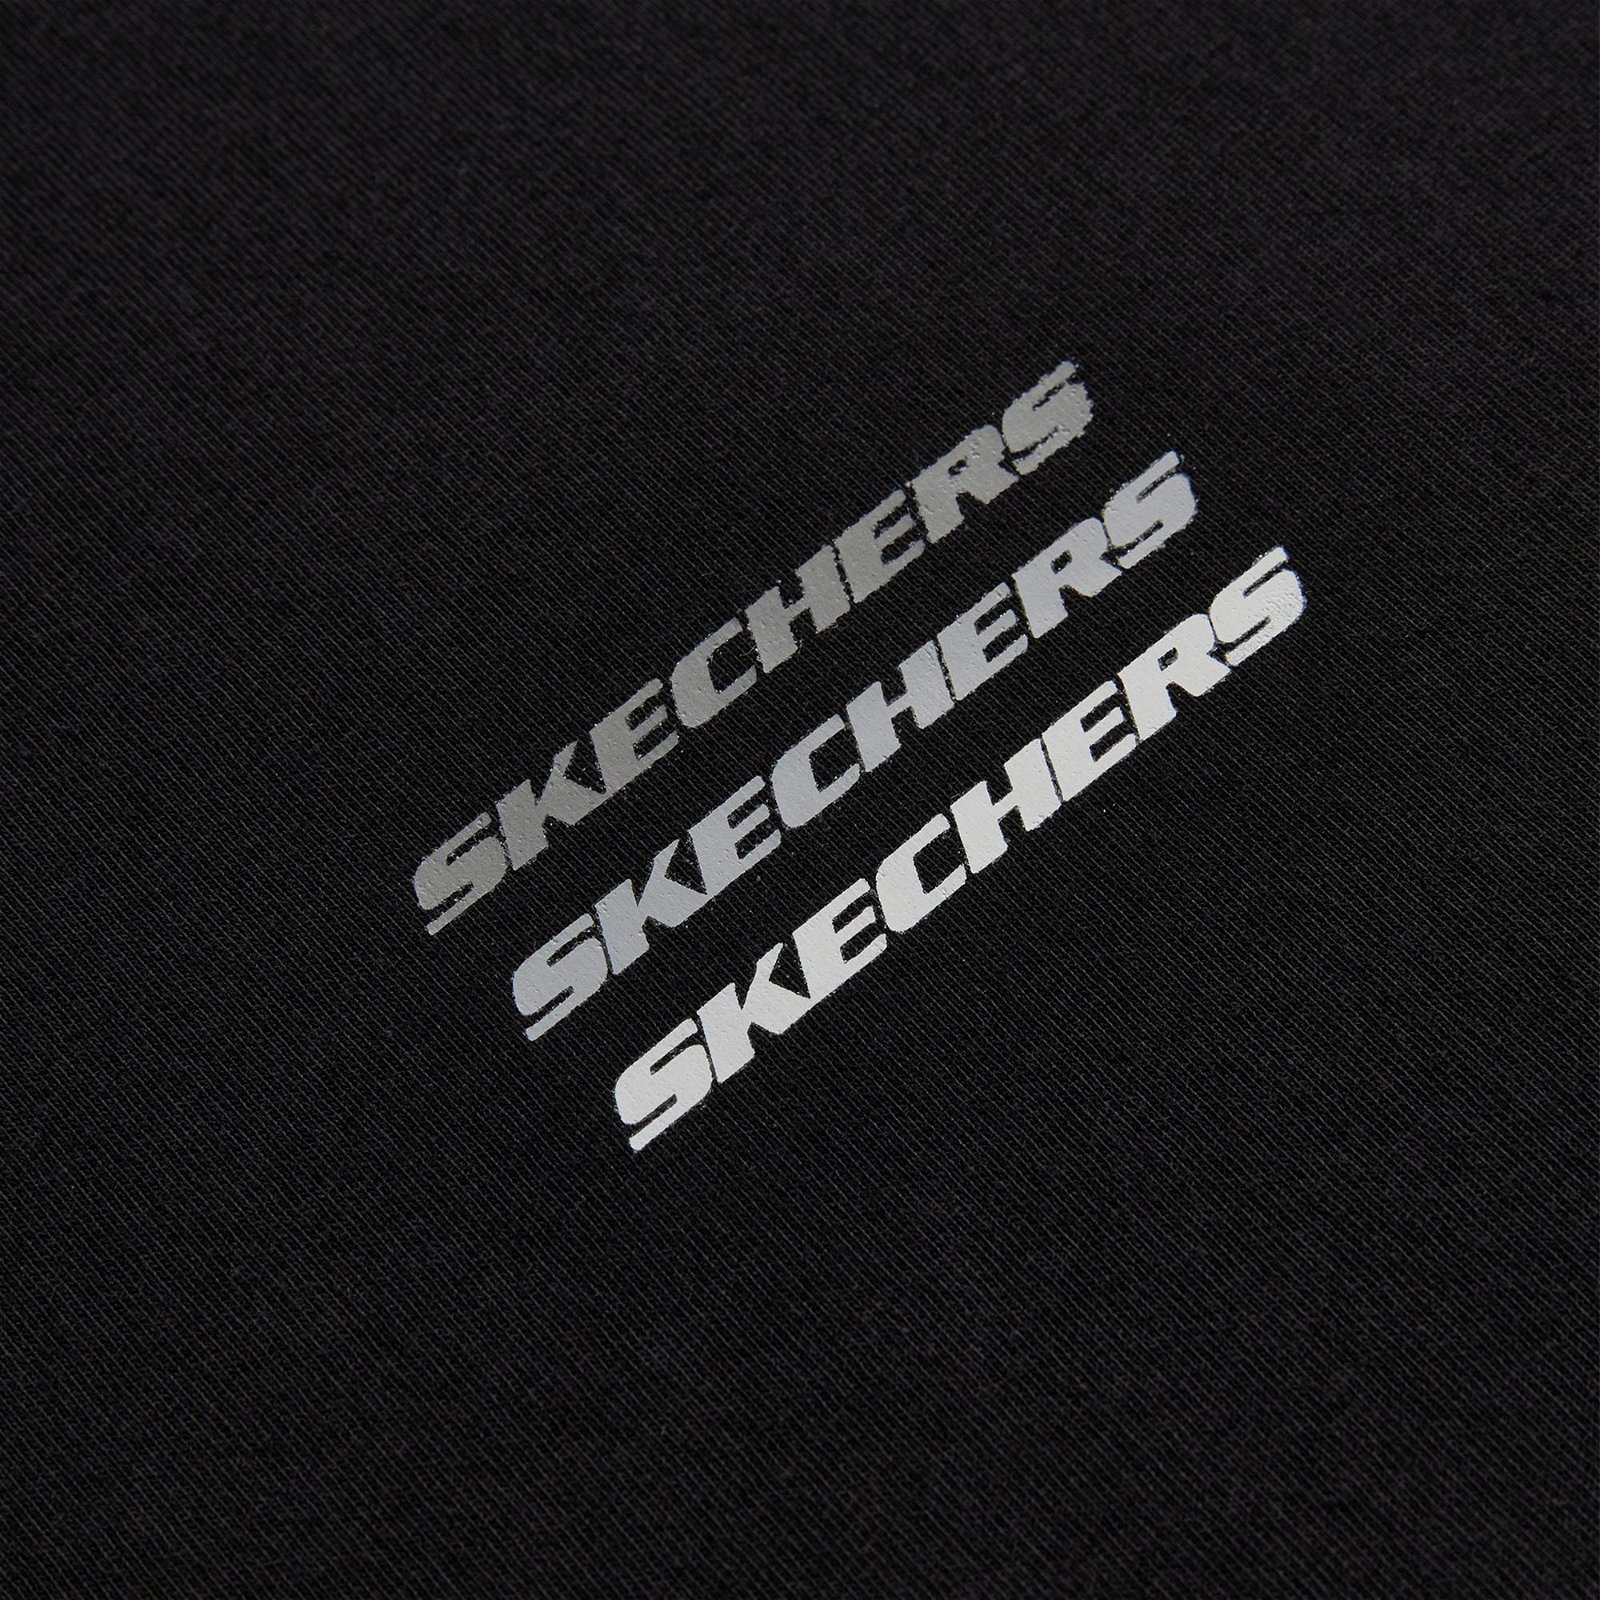 Skechers Essential Erkek Siyah T-Shirt